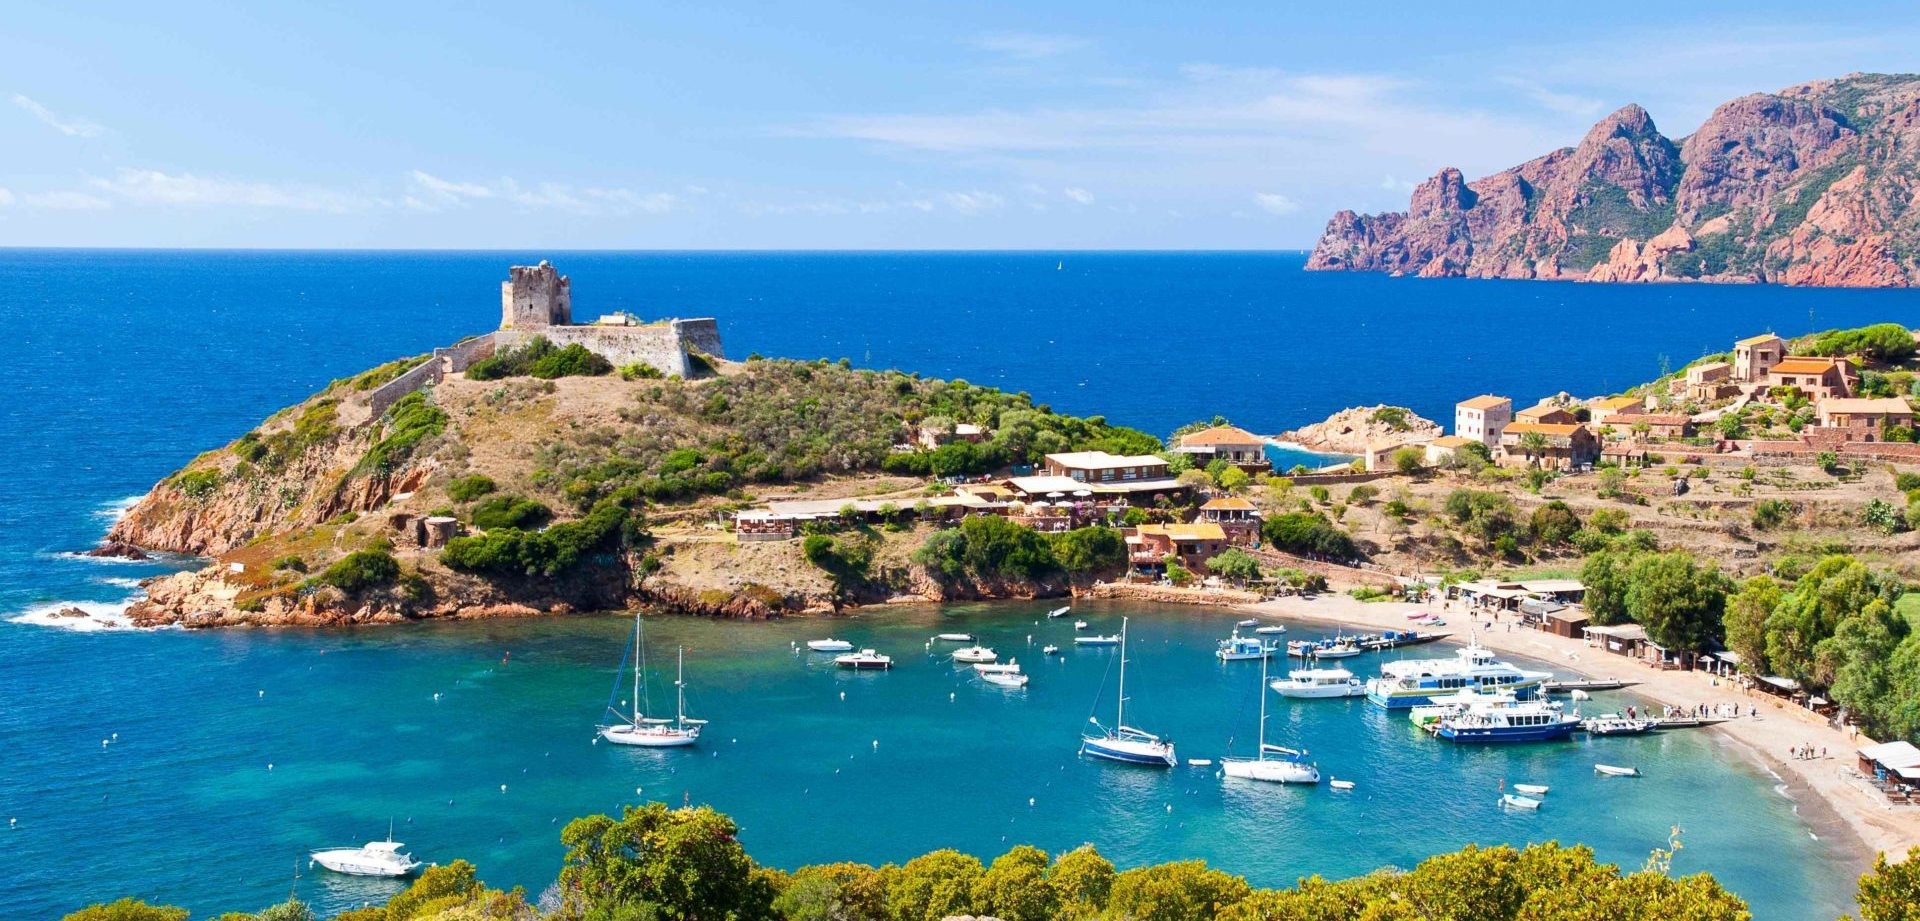 Rejs "All Inclusive": Korsyka katamaranem